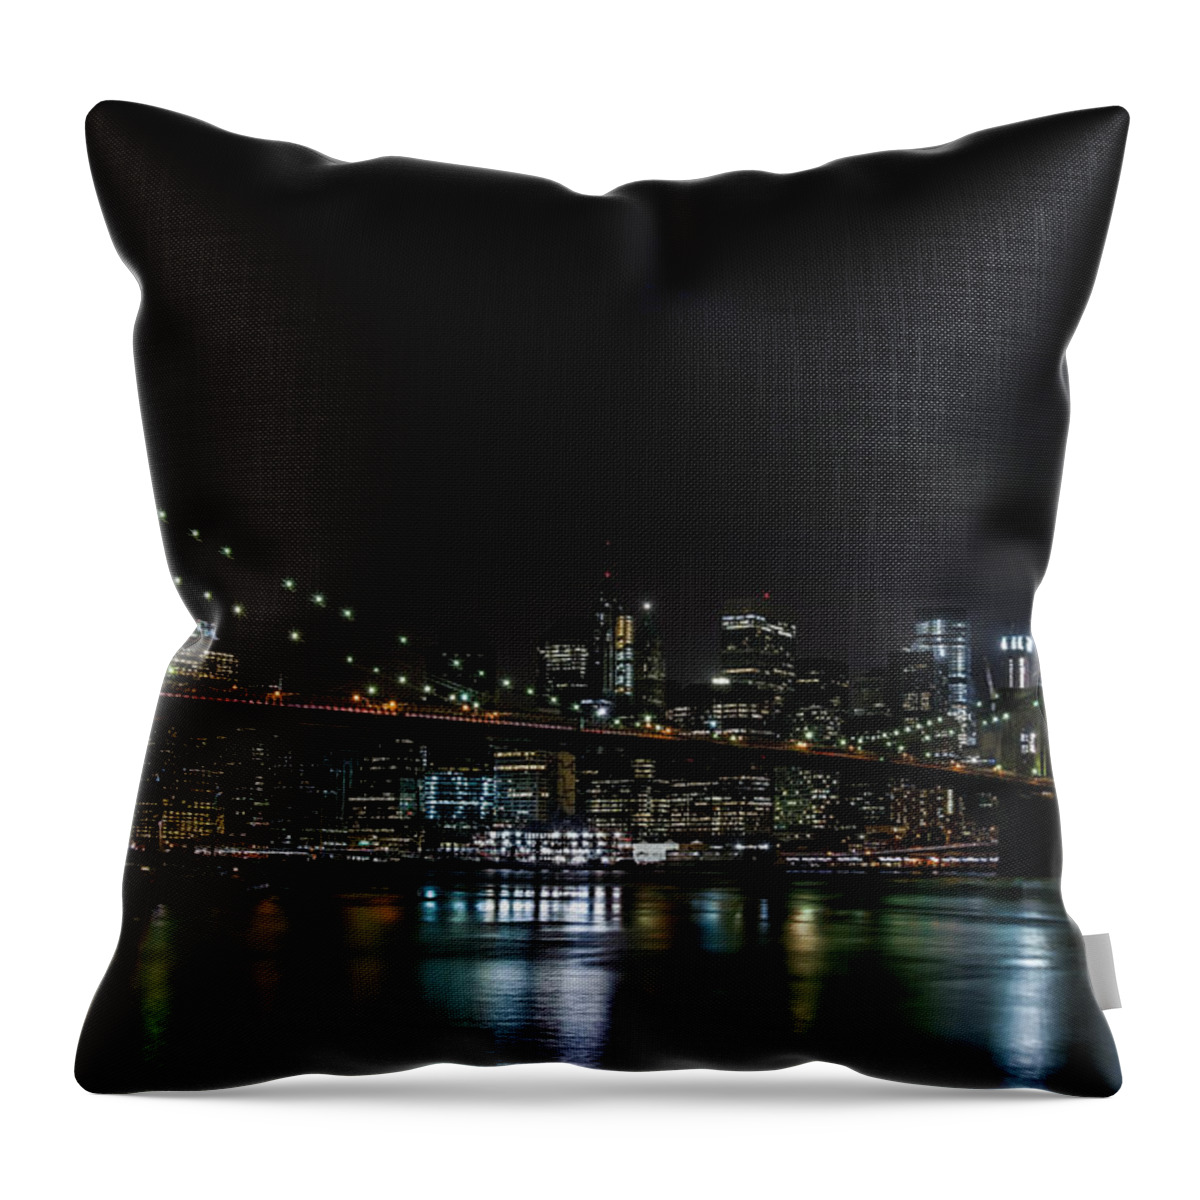 Brooklyn Bridge Throw Pillow featuring the photograph Brooklyn Bridge by Jaime Mercado